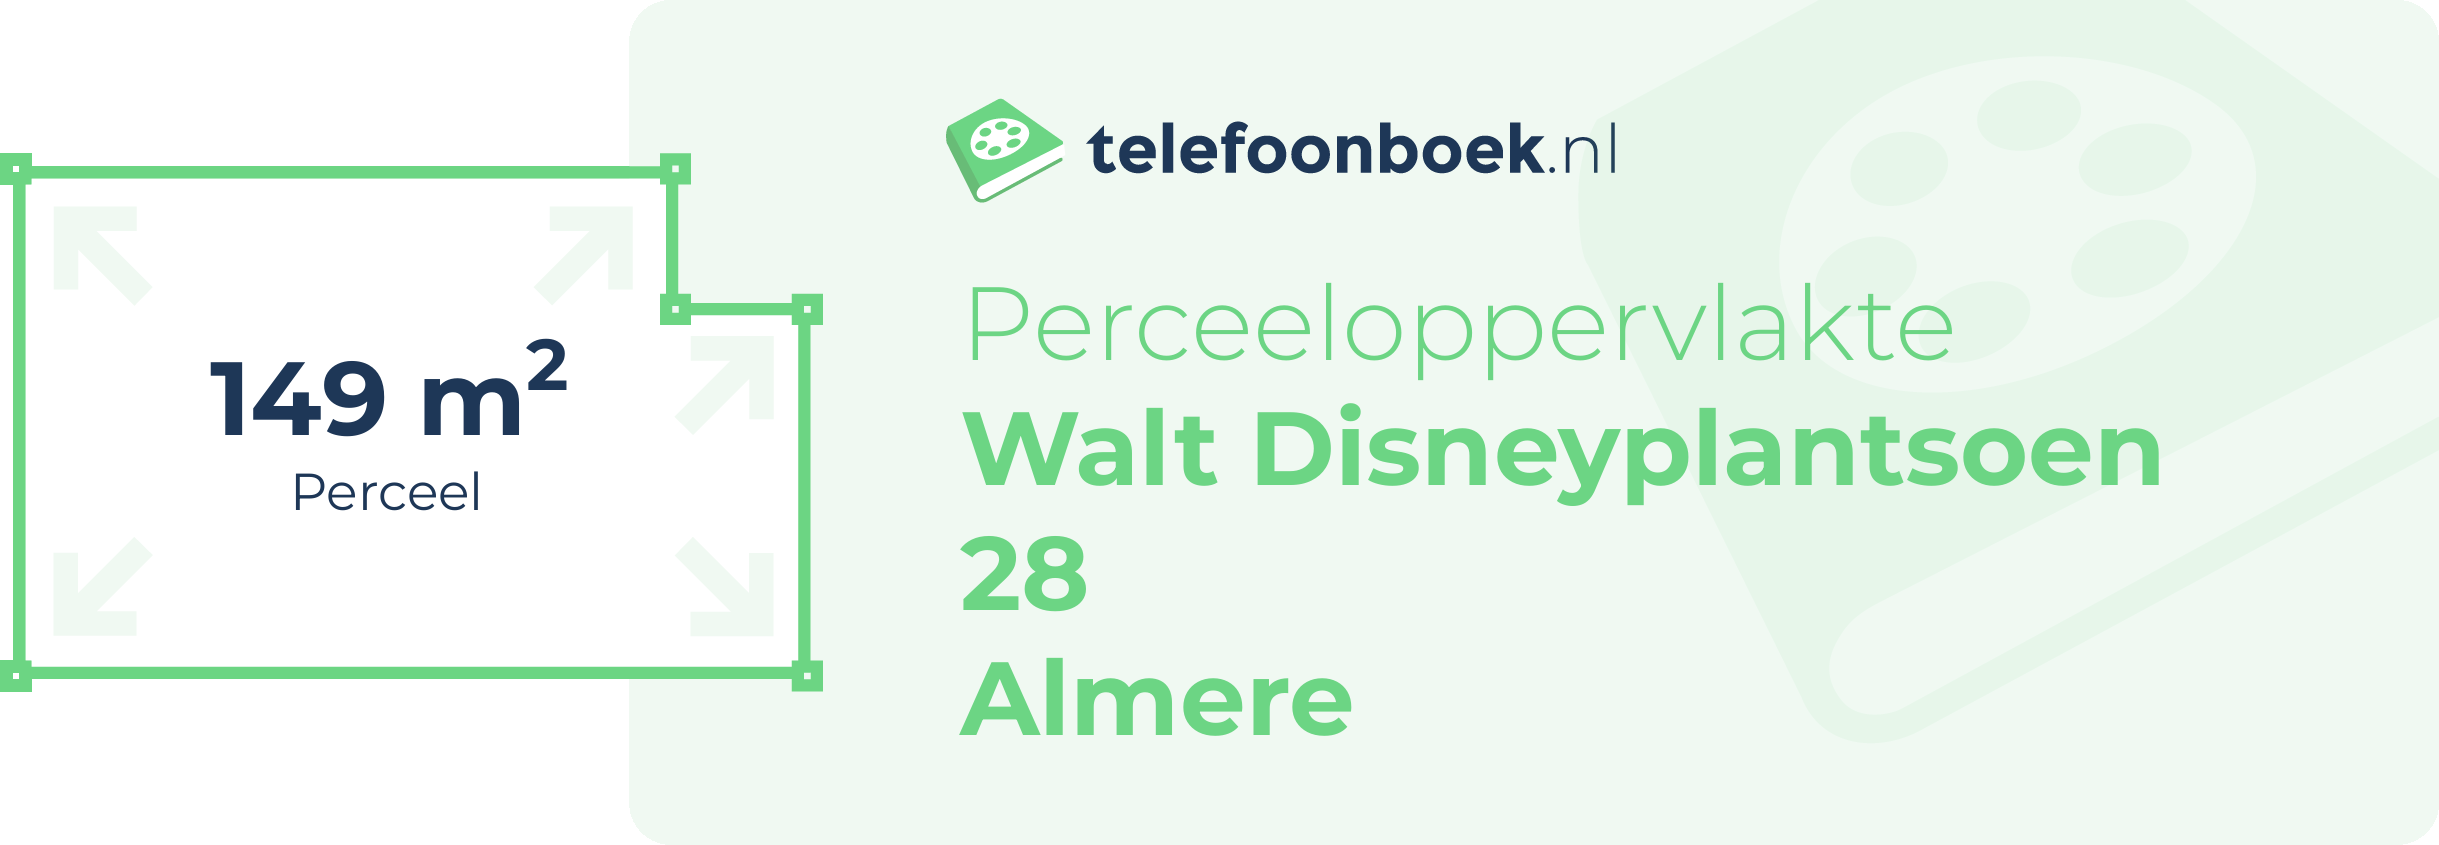 Perceeloppervlakte Walt Disneyplantsoen 28 Almere